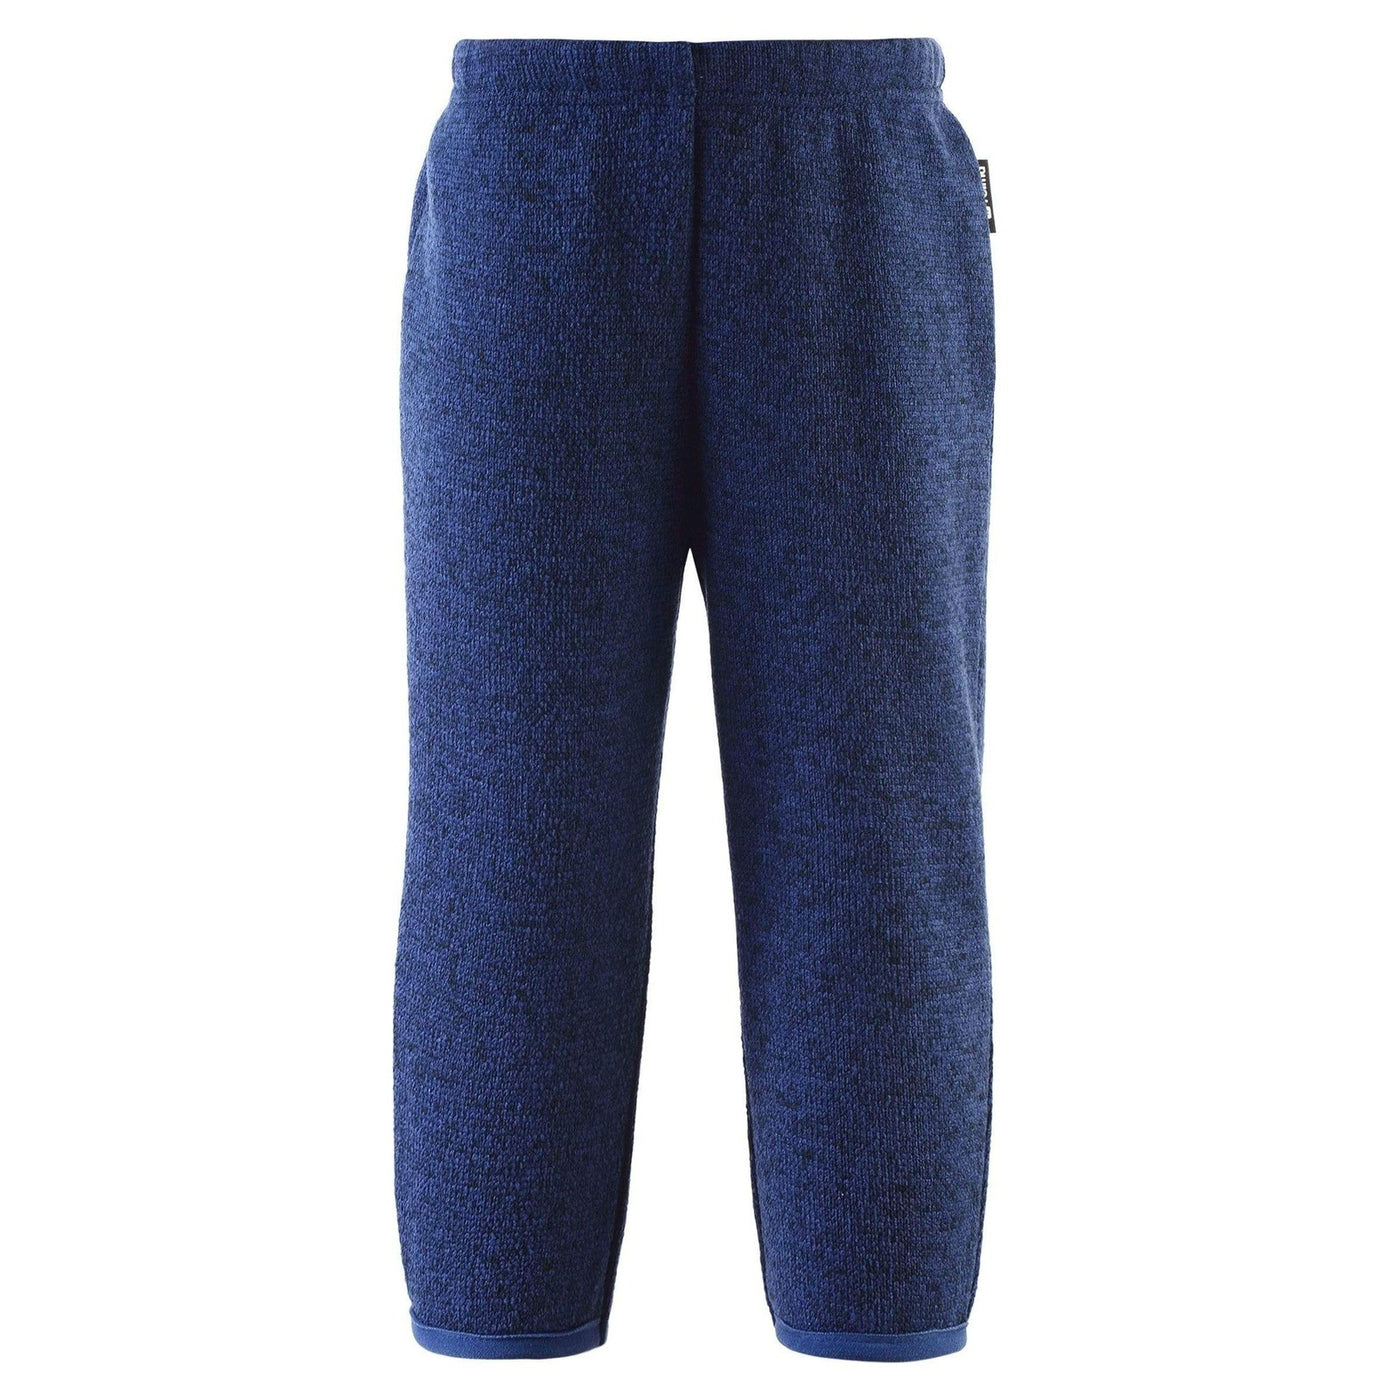 SnowKids Midlayers Reima Tahto Fleece Set - Jeans Blue